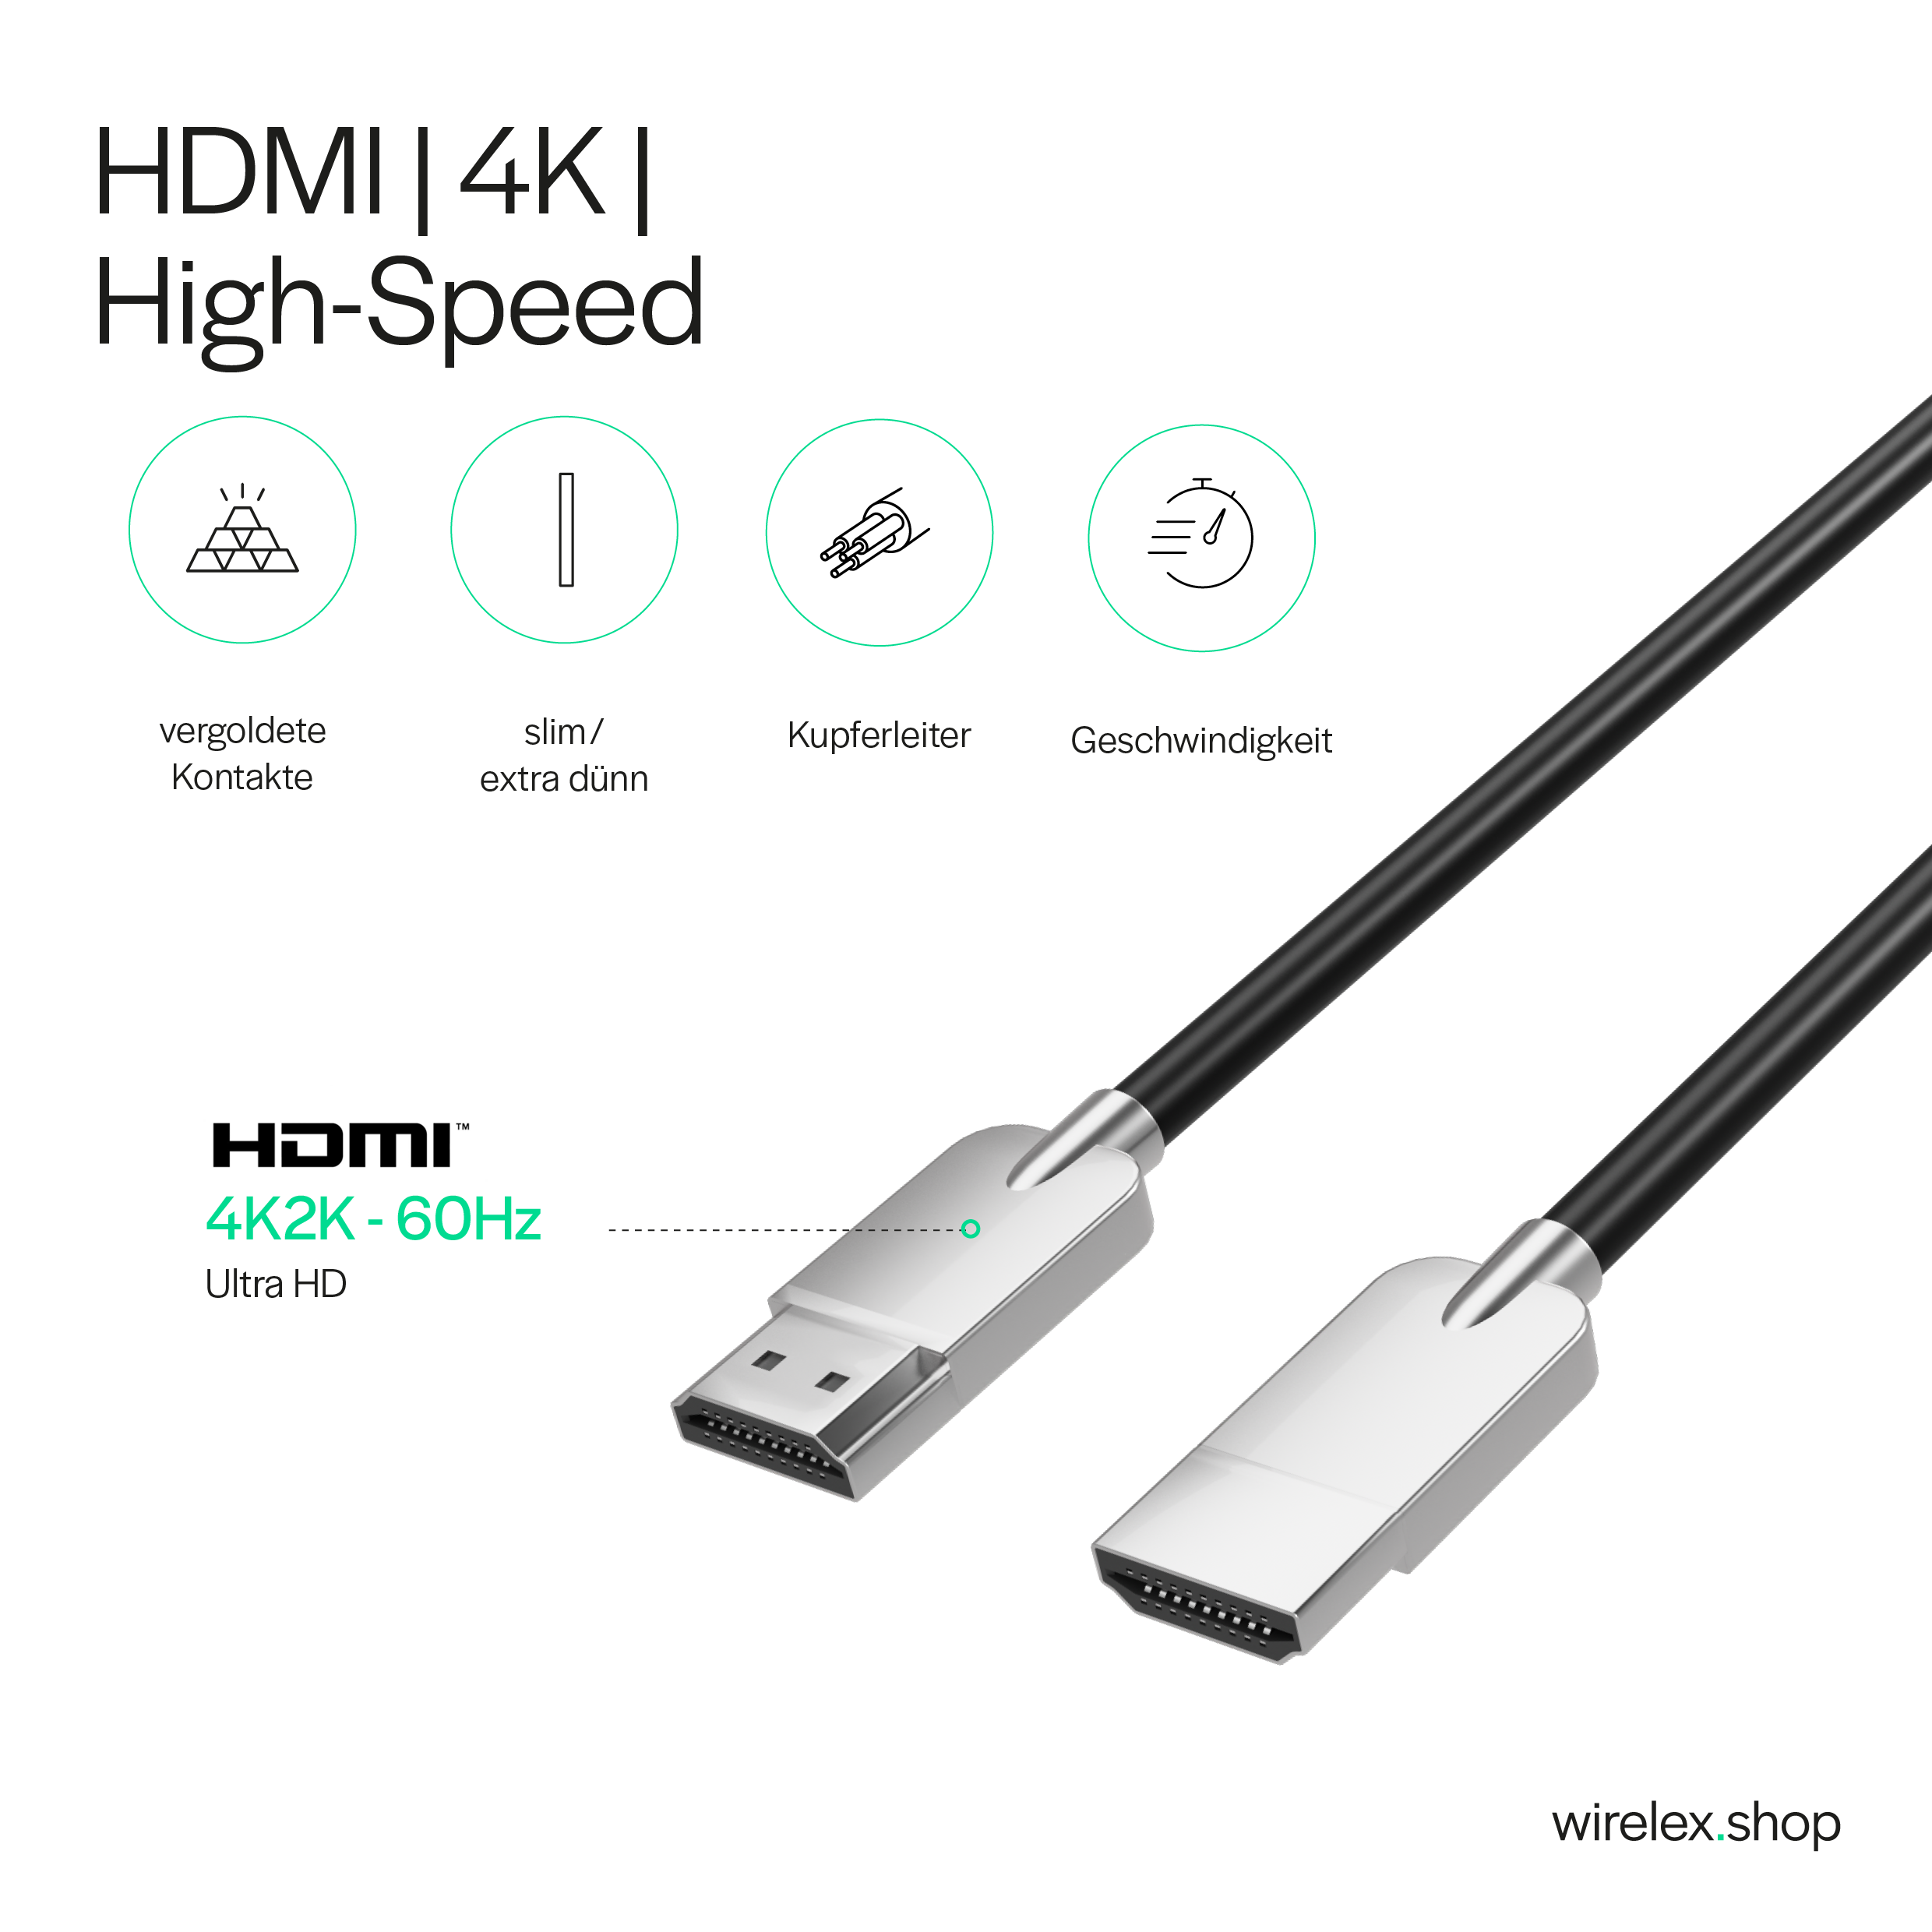 ULTRA HD, Kabel HEAC, FLEXLINE HD, Full HDMI 0,5m 4K2K Kabel, HDMI 3D,